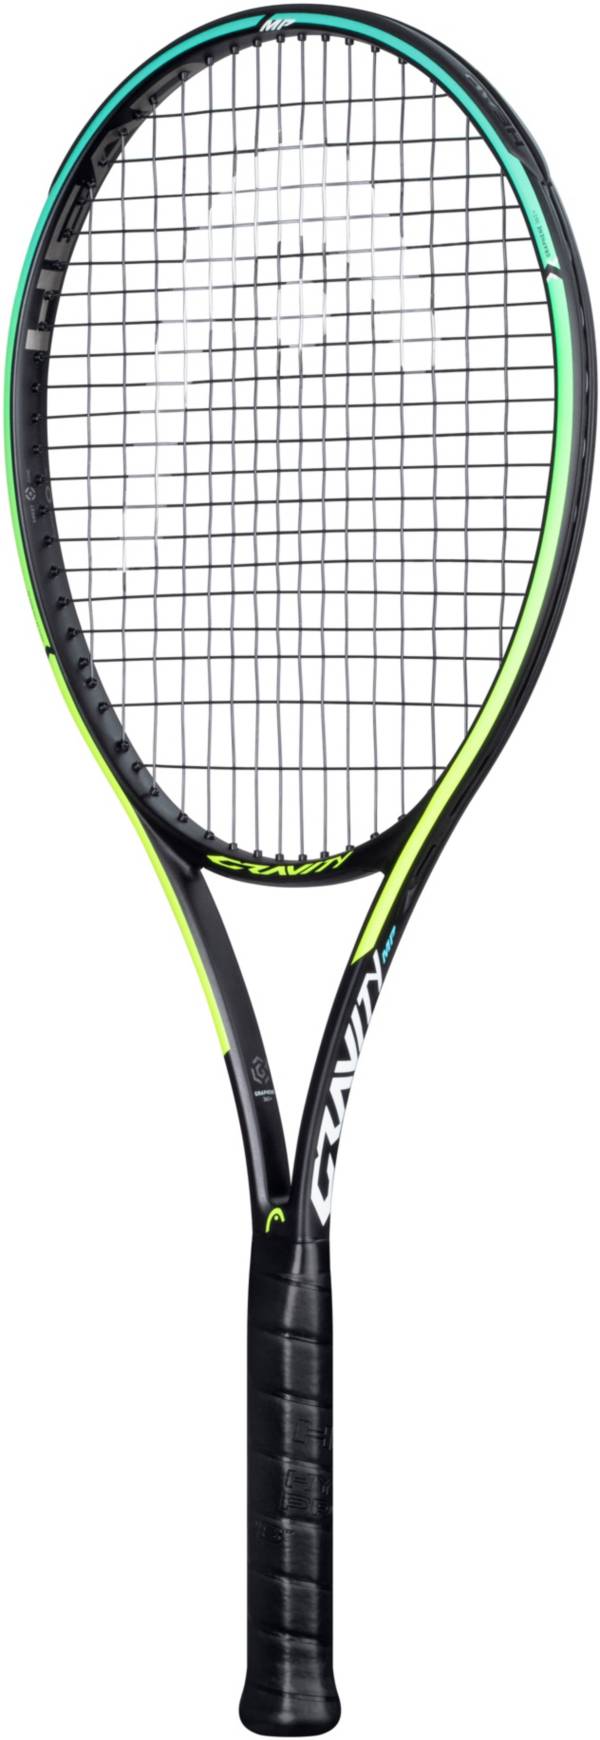 Head Graphene 2021 Gravity MP Tennis Racquet - Unstrung product image